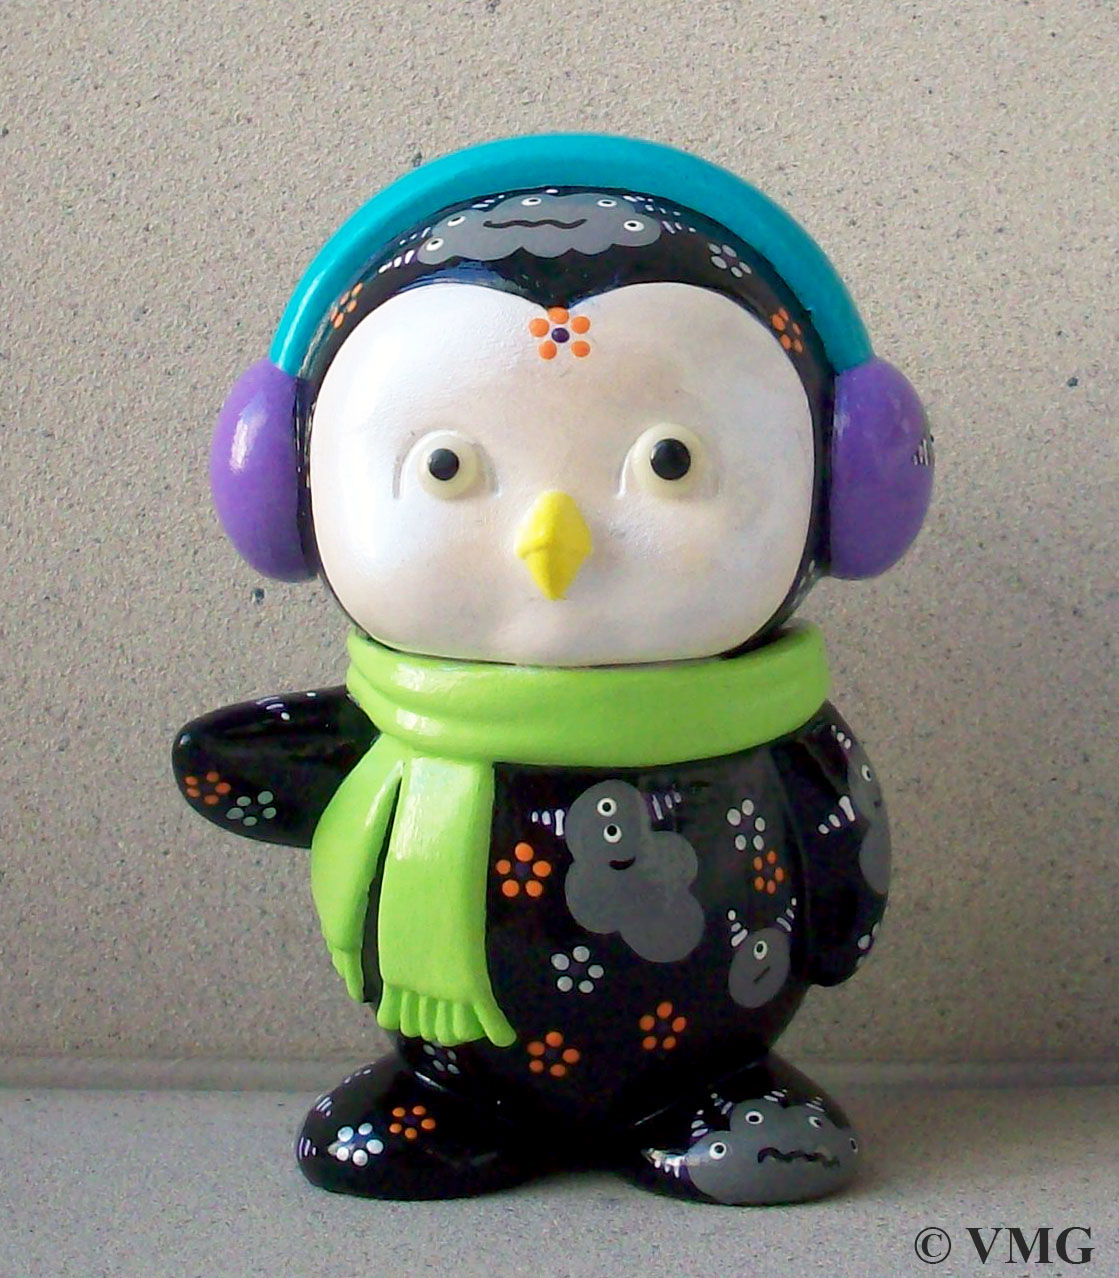 dumplings monsters penguins Ice Bat Uglydolls pocket pork shawnanimals david horvath Sun-Min Kim Custom Urban vinyl art toys